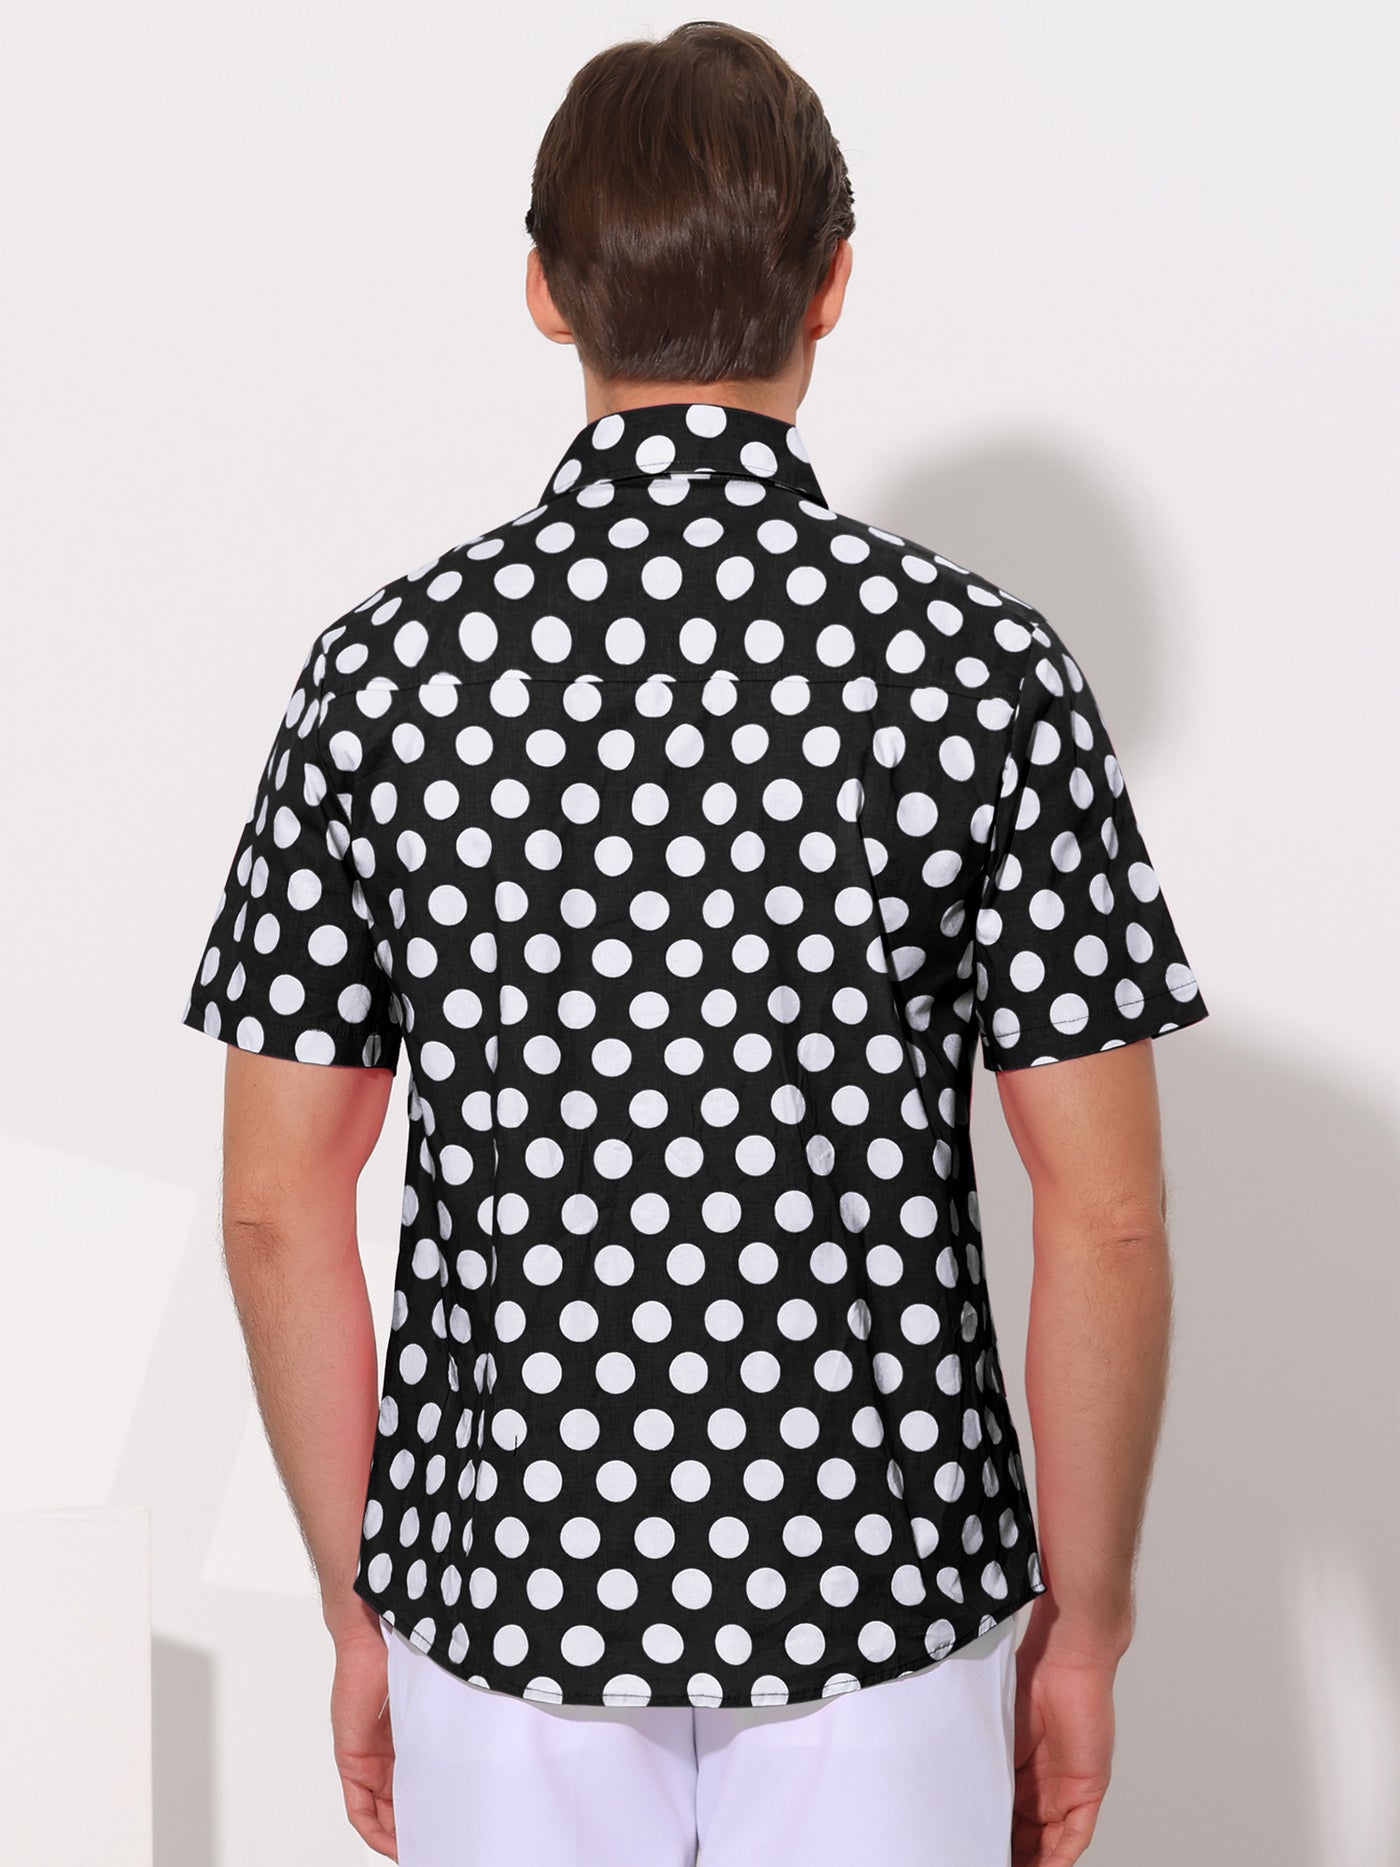 Bublédon Polka Dots Pattern Point Collar Short Sleeves Printed Dress Shirts